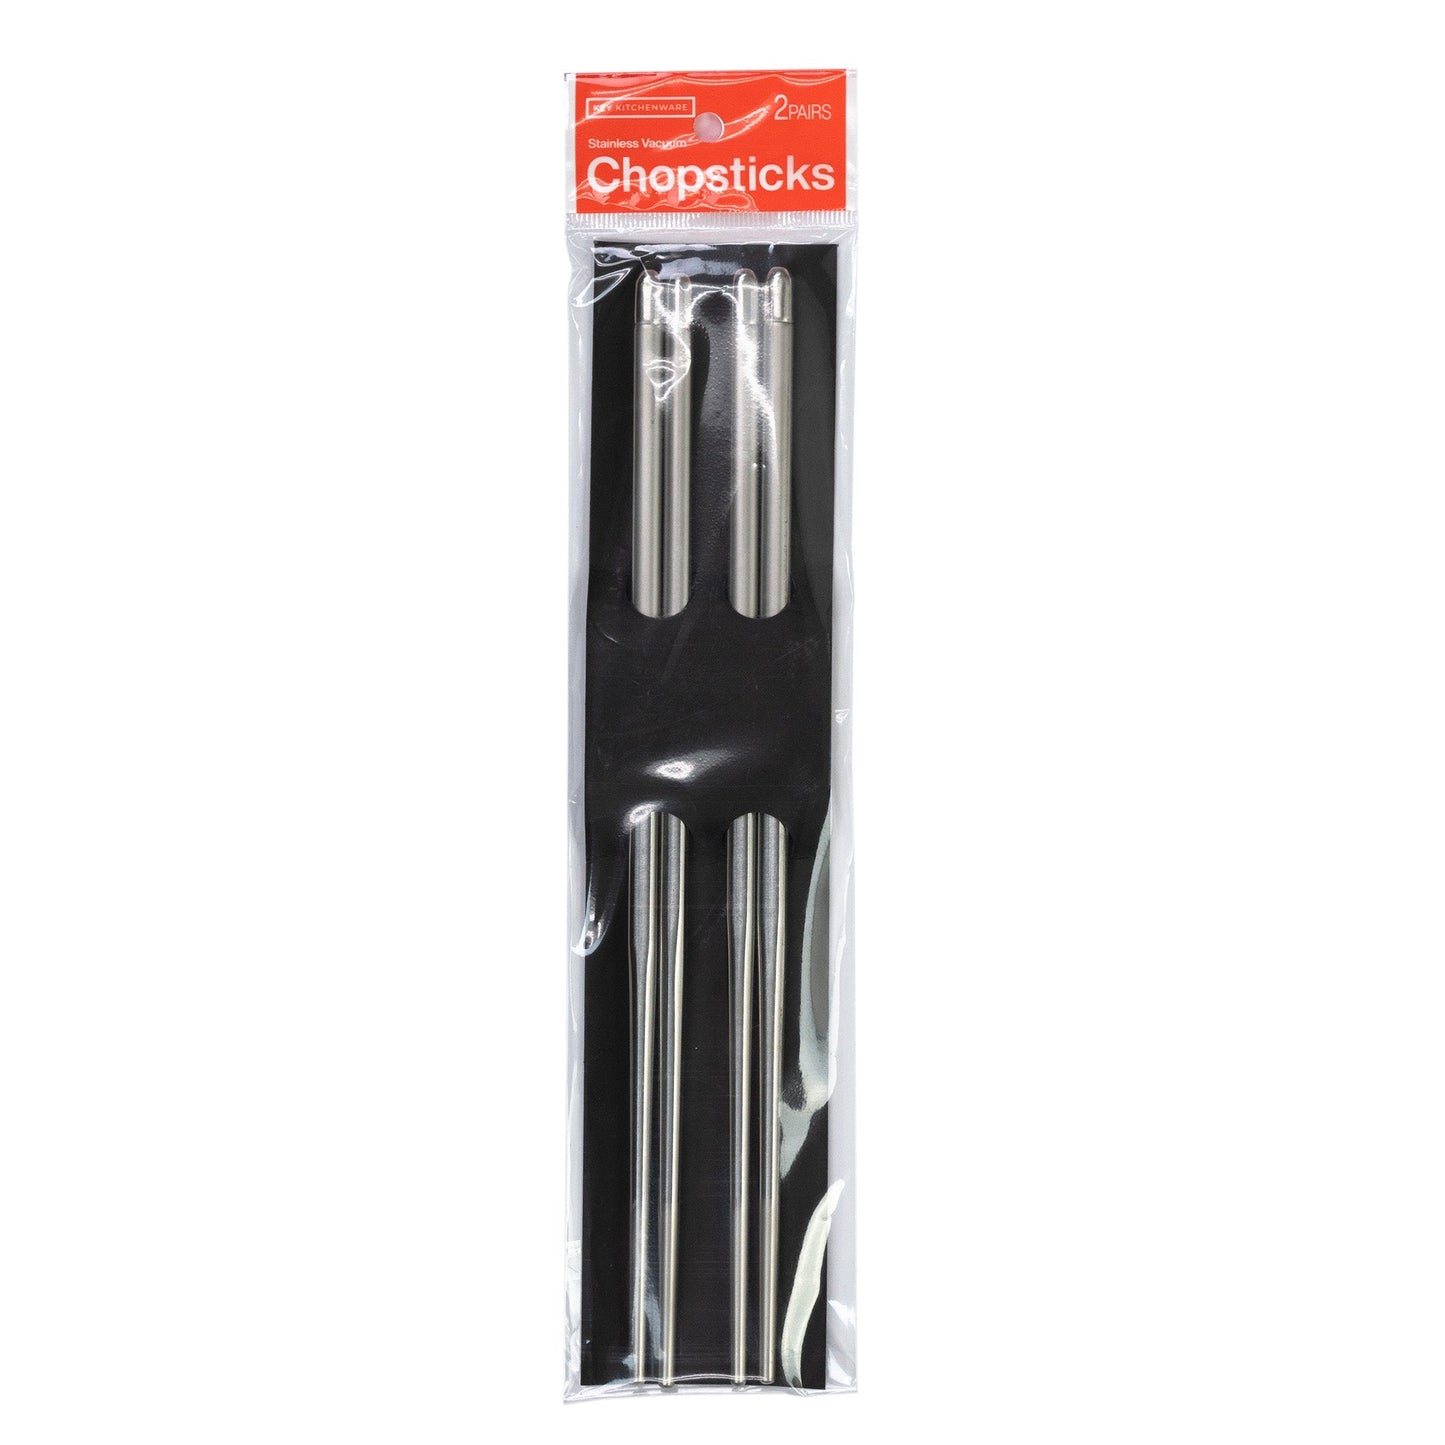 S/S Vacuum Chopsticks Set - 2 Pairs